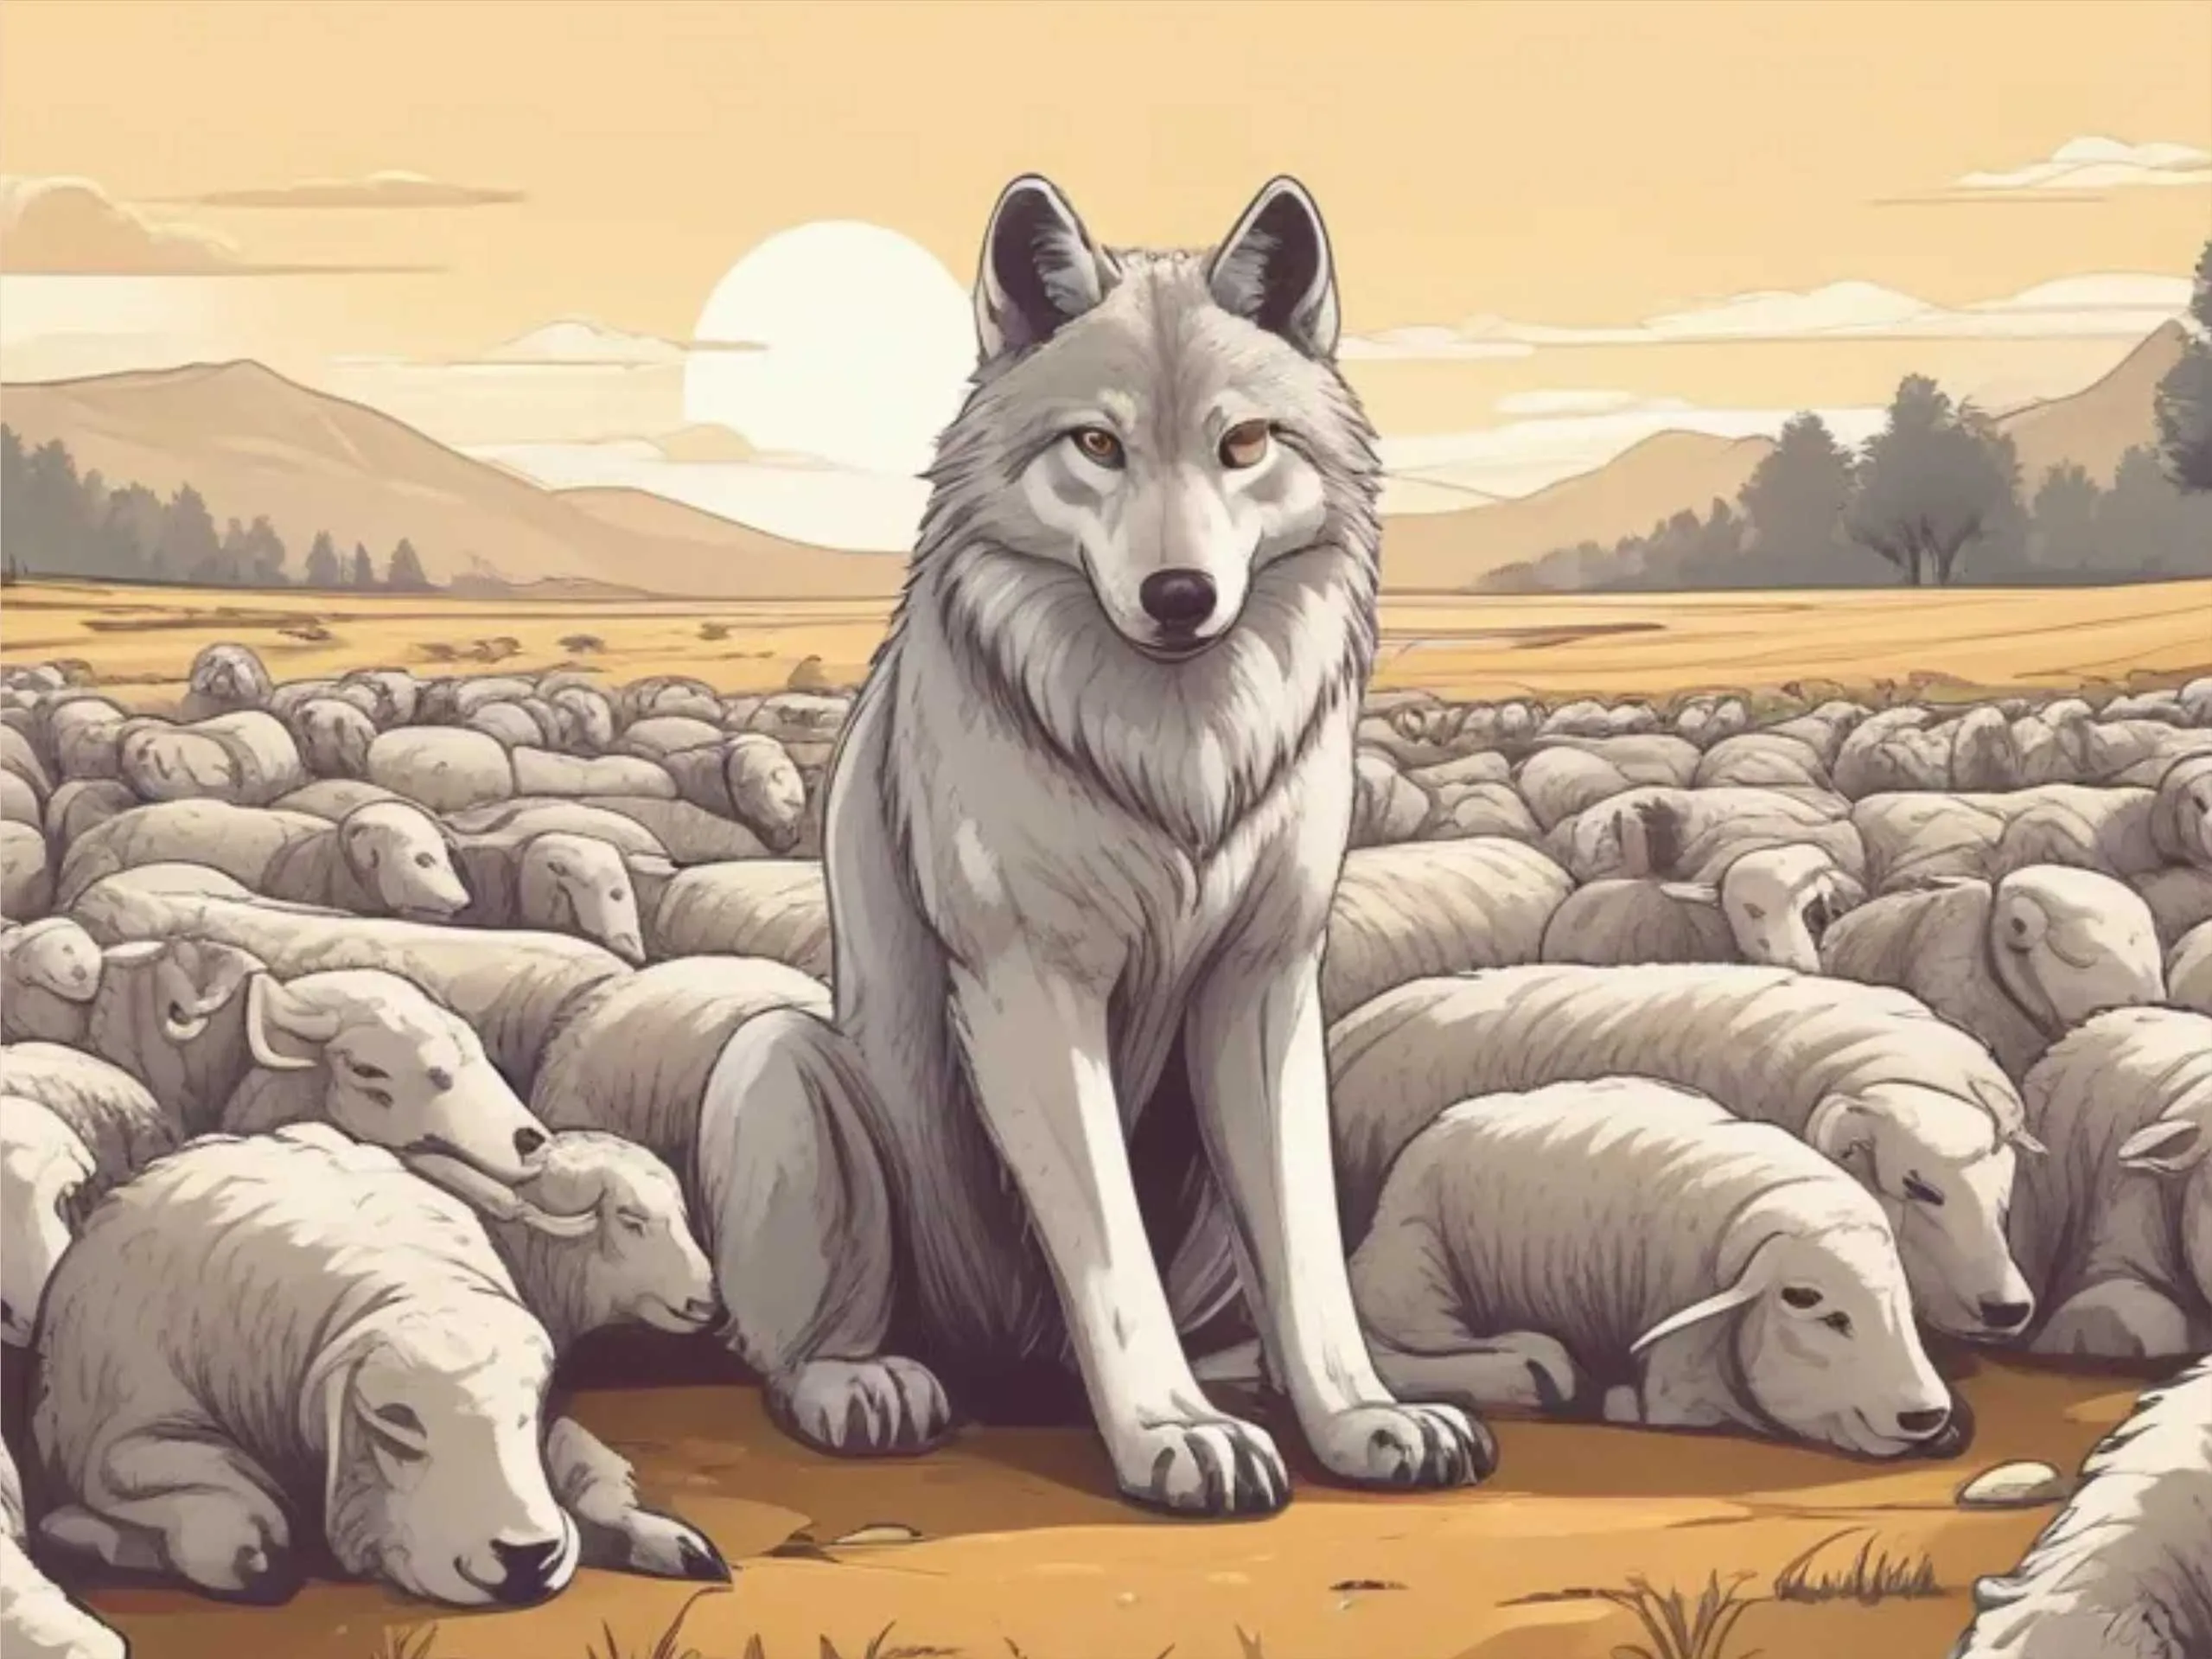 wolf in heard of sheep cartoon image